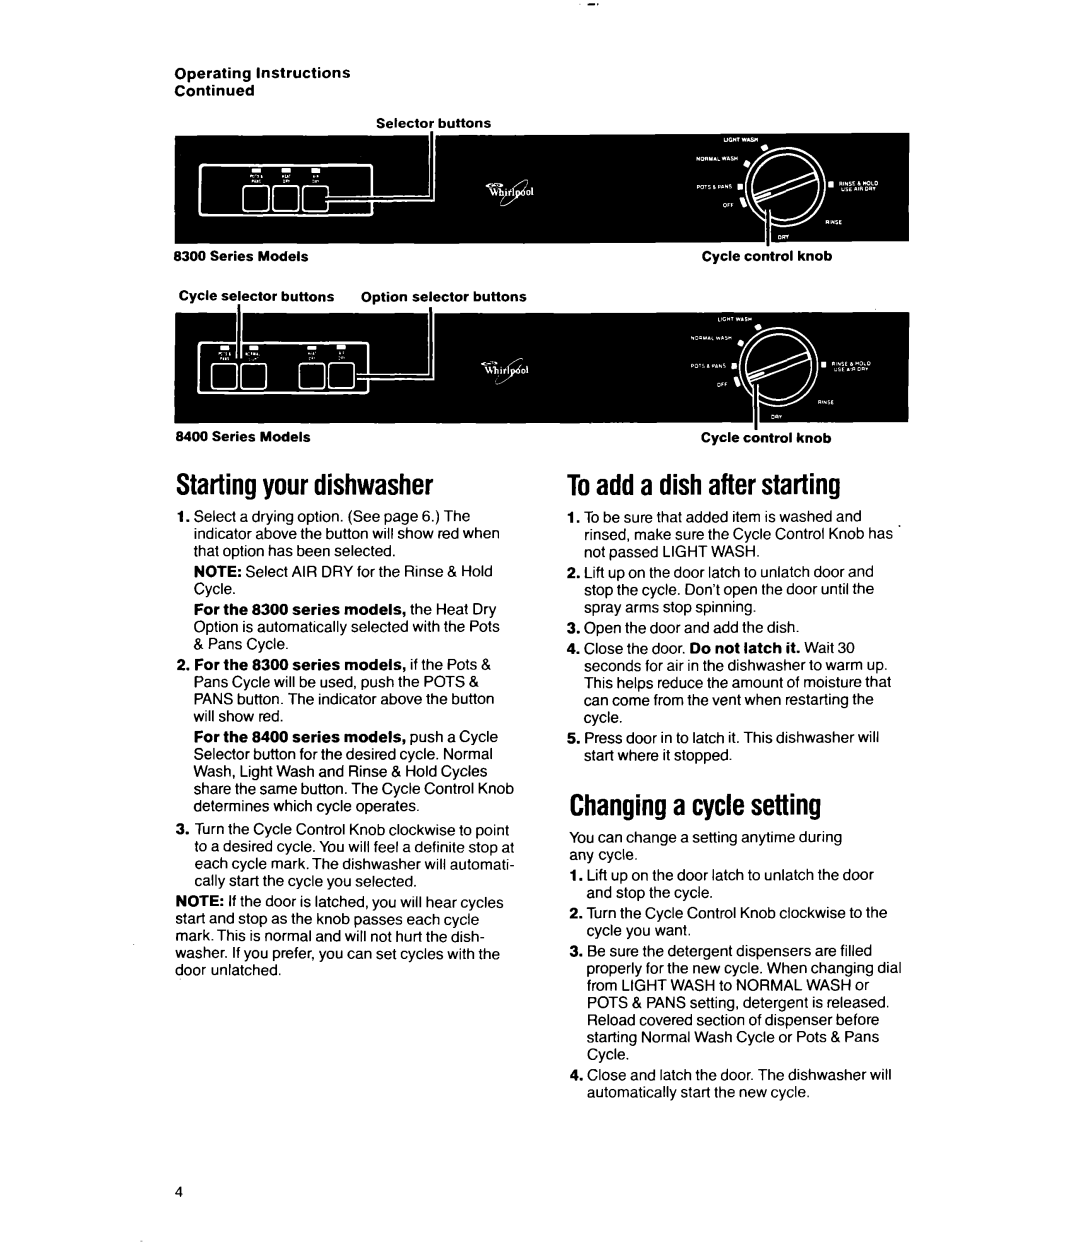 Whirlpool 8400 Series, 8300 Series manual Startingyourdishwasher, Toadda dishafterstarting, Changing cyclesetting 